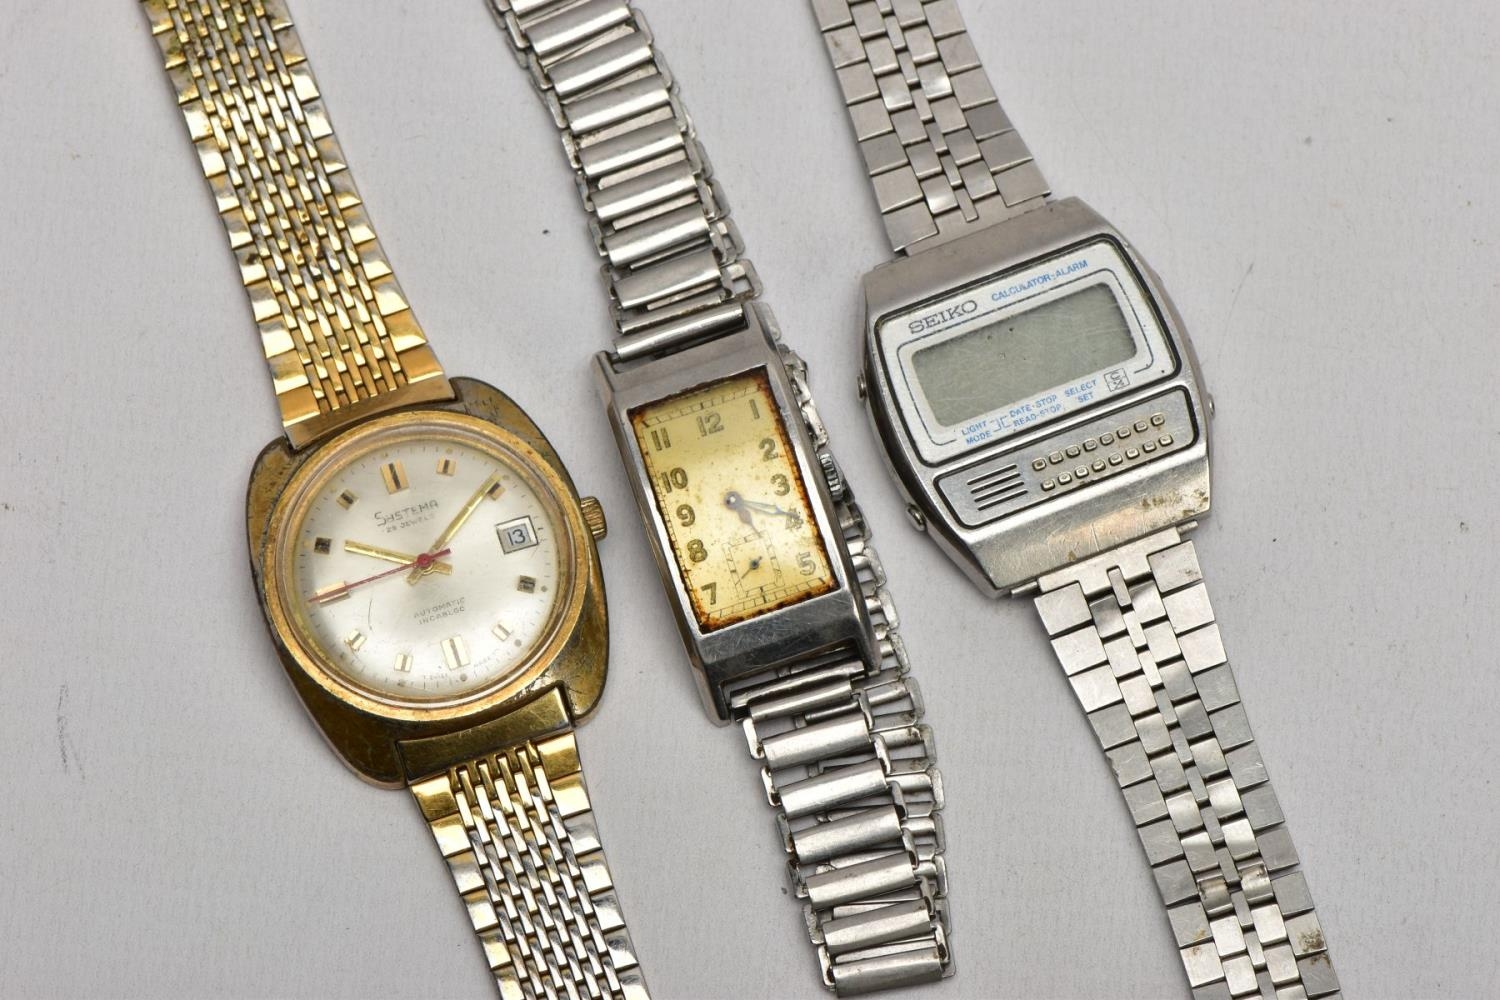 THREE VINTAGE WRISTWATCHES, to include a Seiko digital calculator alarm  watch, a Systema wristwatch